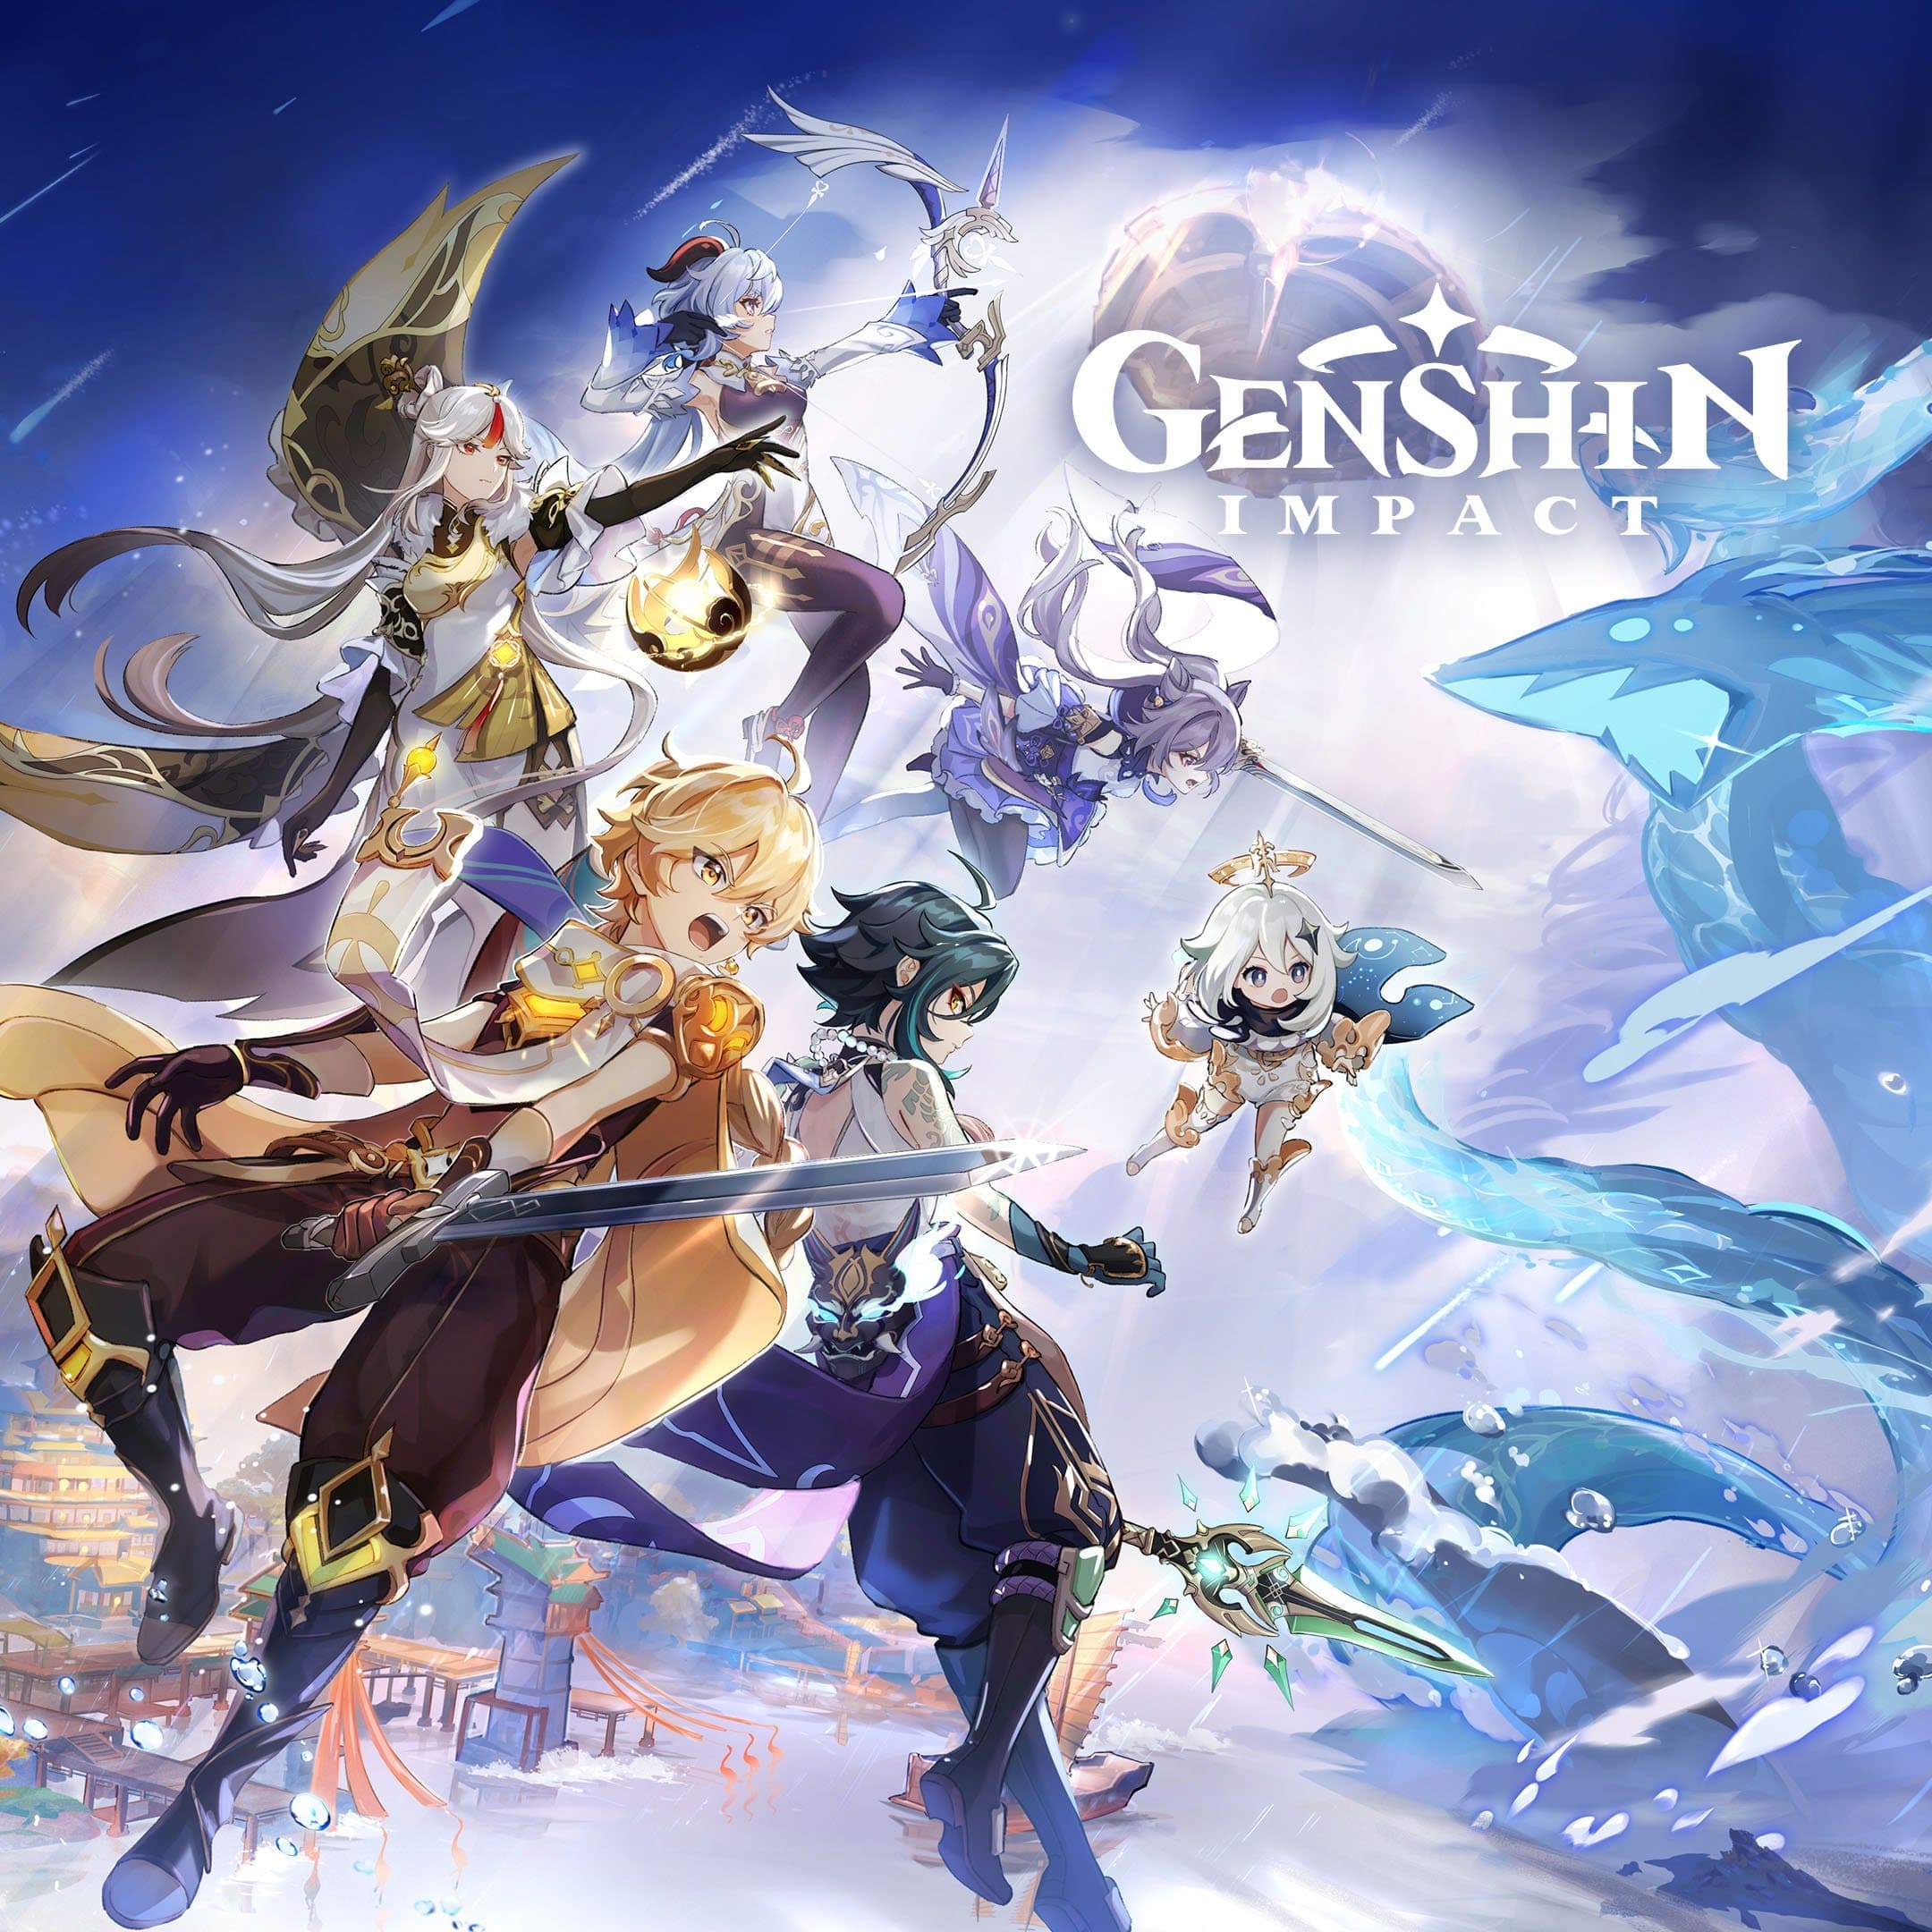  Genshin Impact بهترین بازی موبایل سال